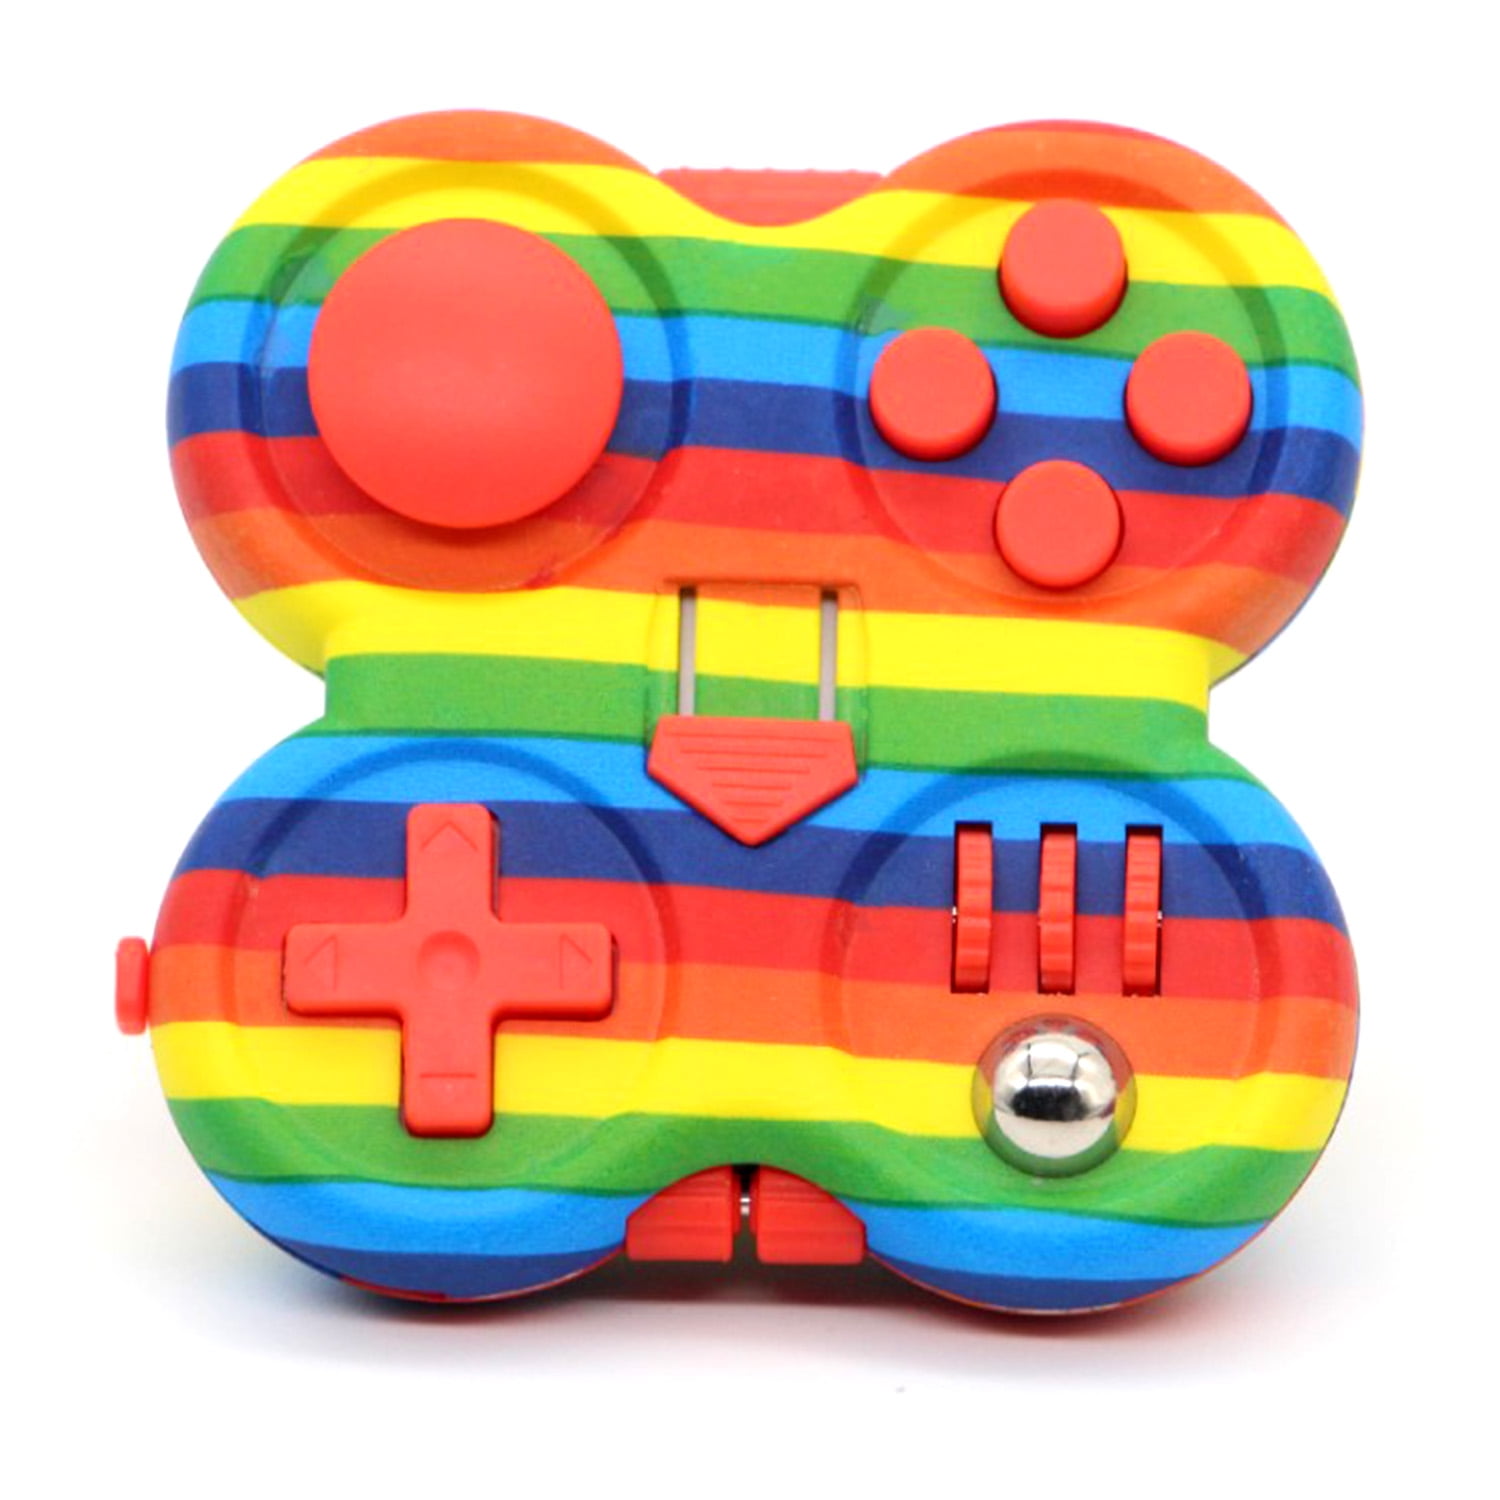 Fuwaxung Fidget Toys Packs Pop Fidgets Cube Spinners Fidget Pad